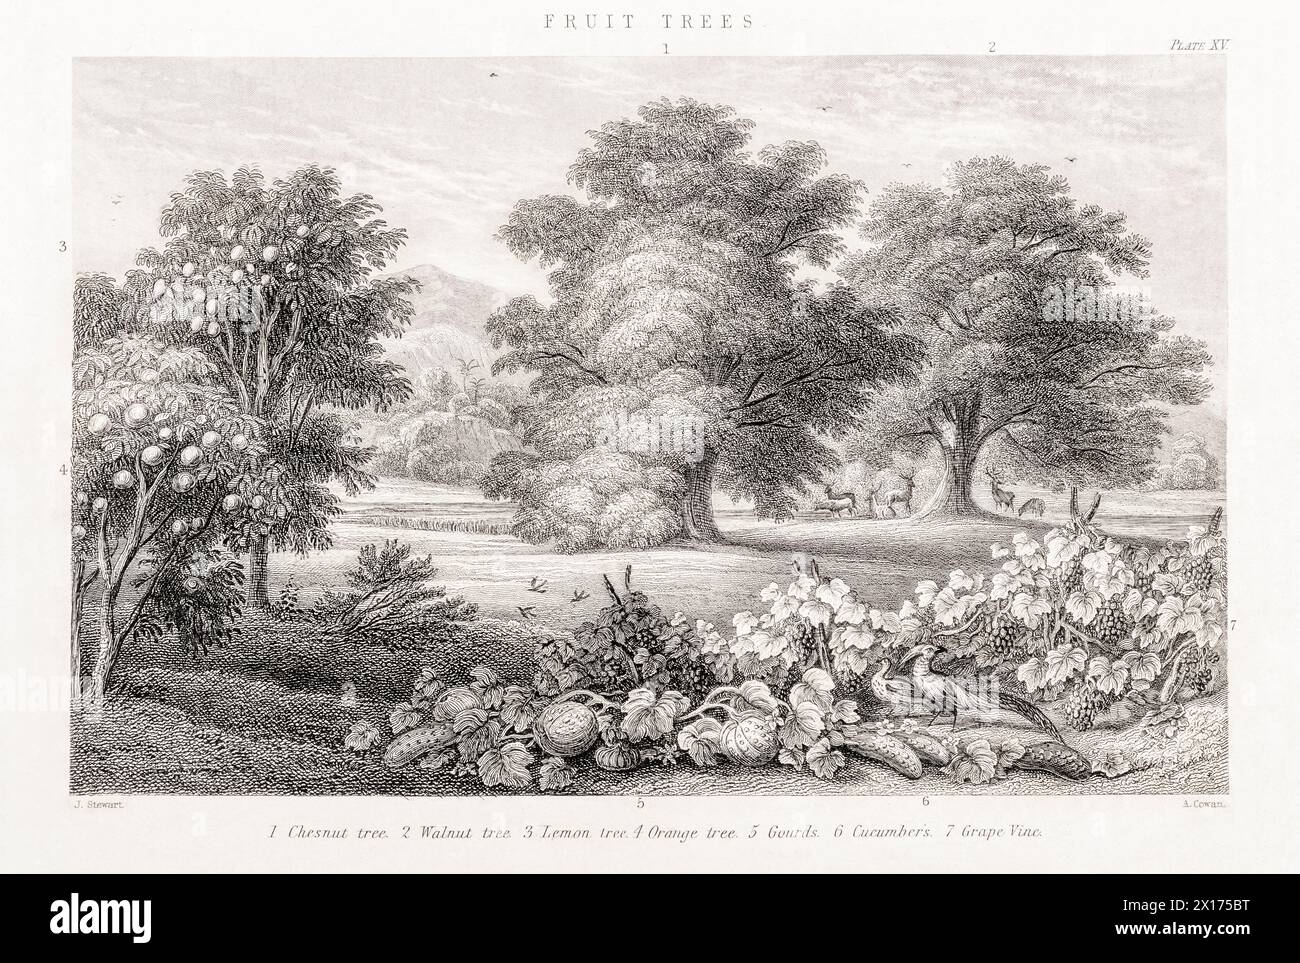 1872 Victorian botanical picture in William Rhind: Fruit Trees. Seen are Orange & Lemon trees, Walnut, Chestnut, Gourd, Grape Vine, Cucumber. Stock Photo